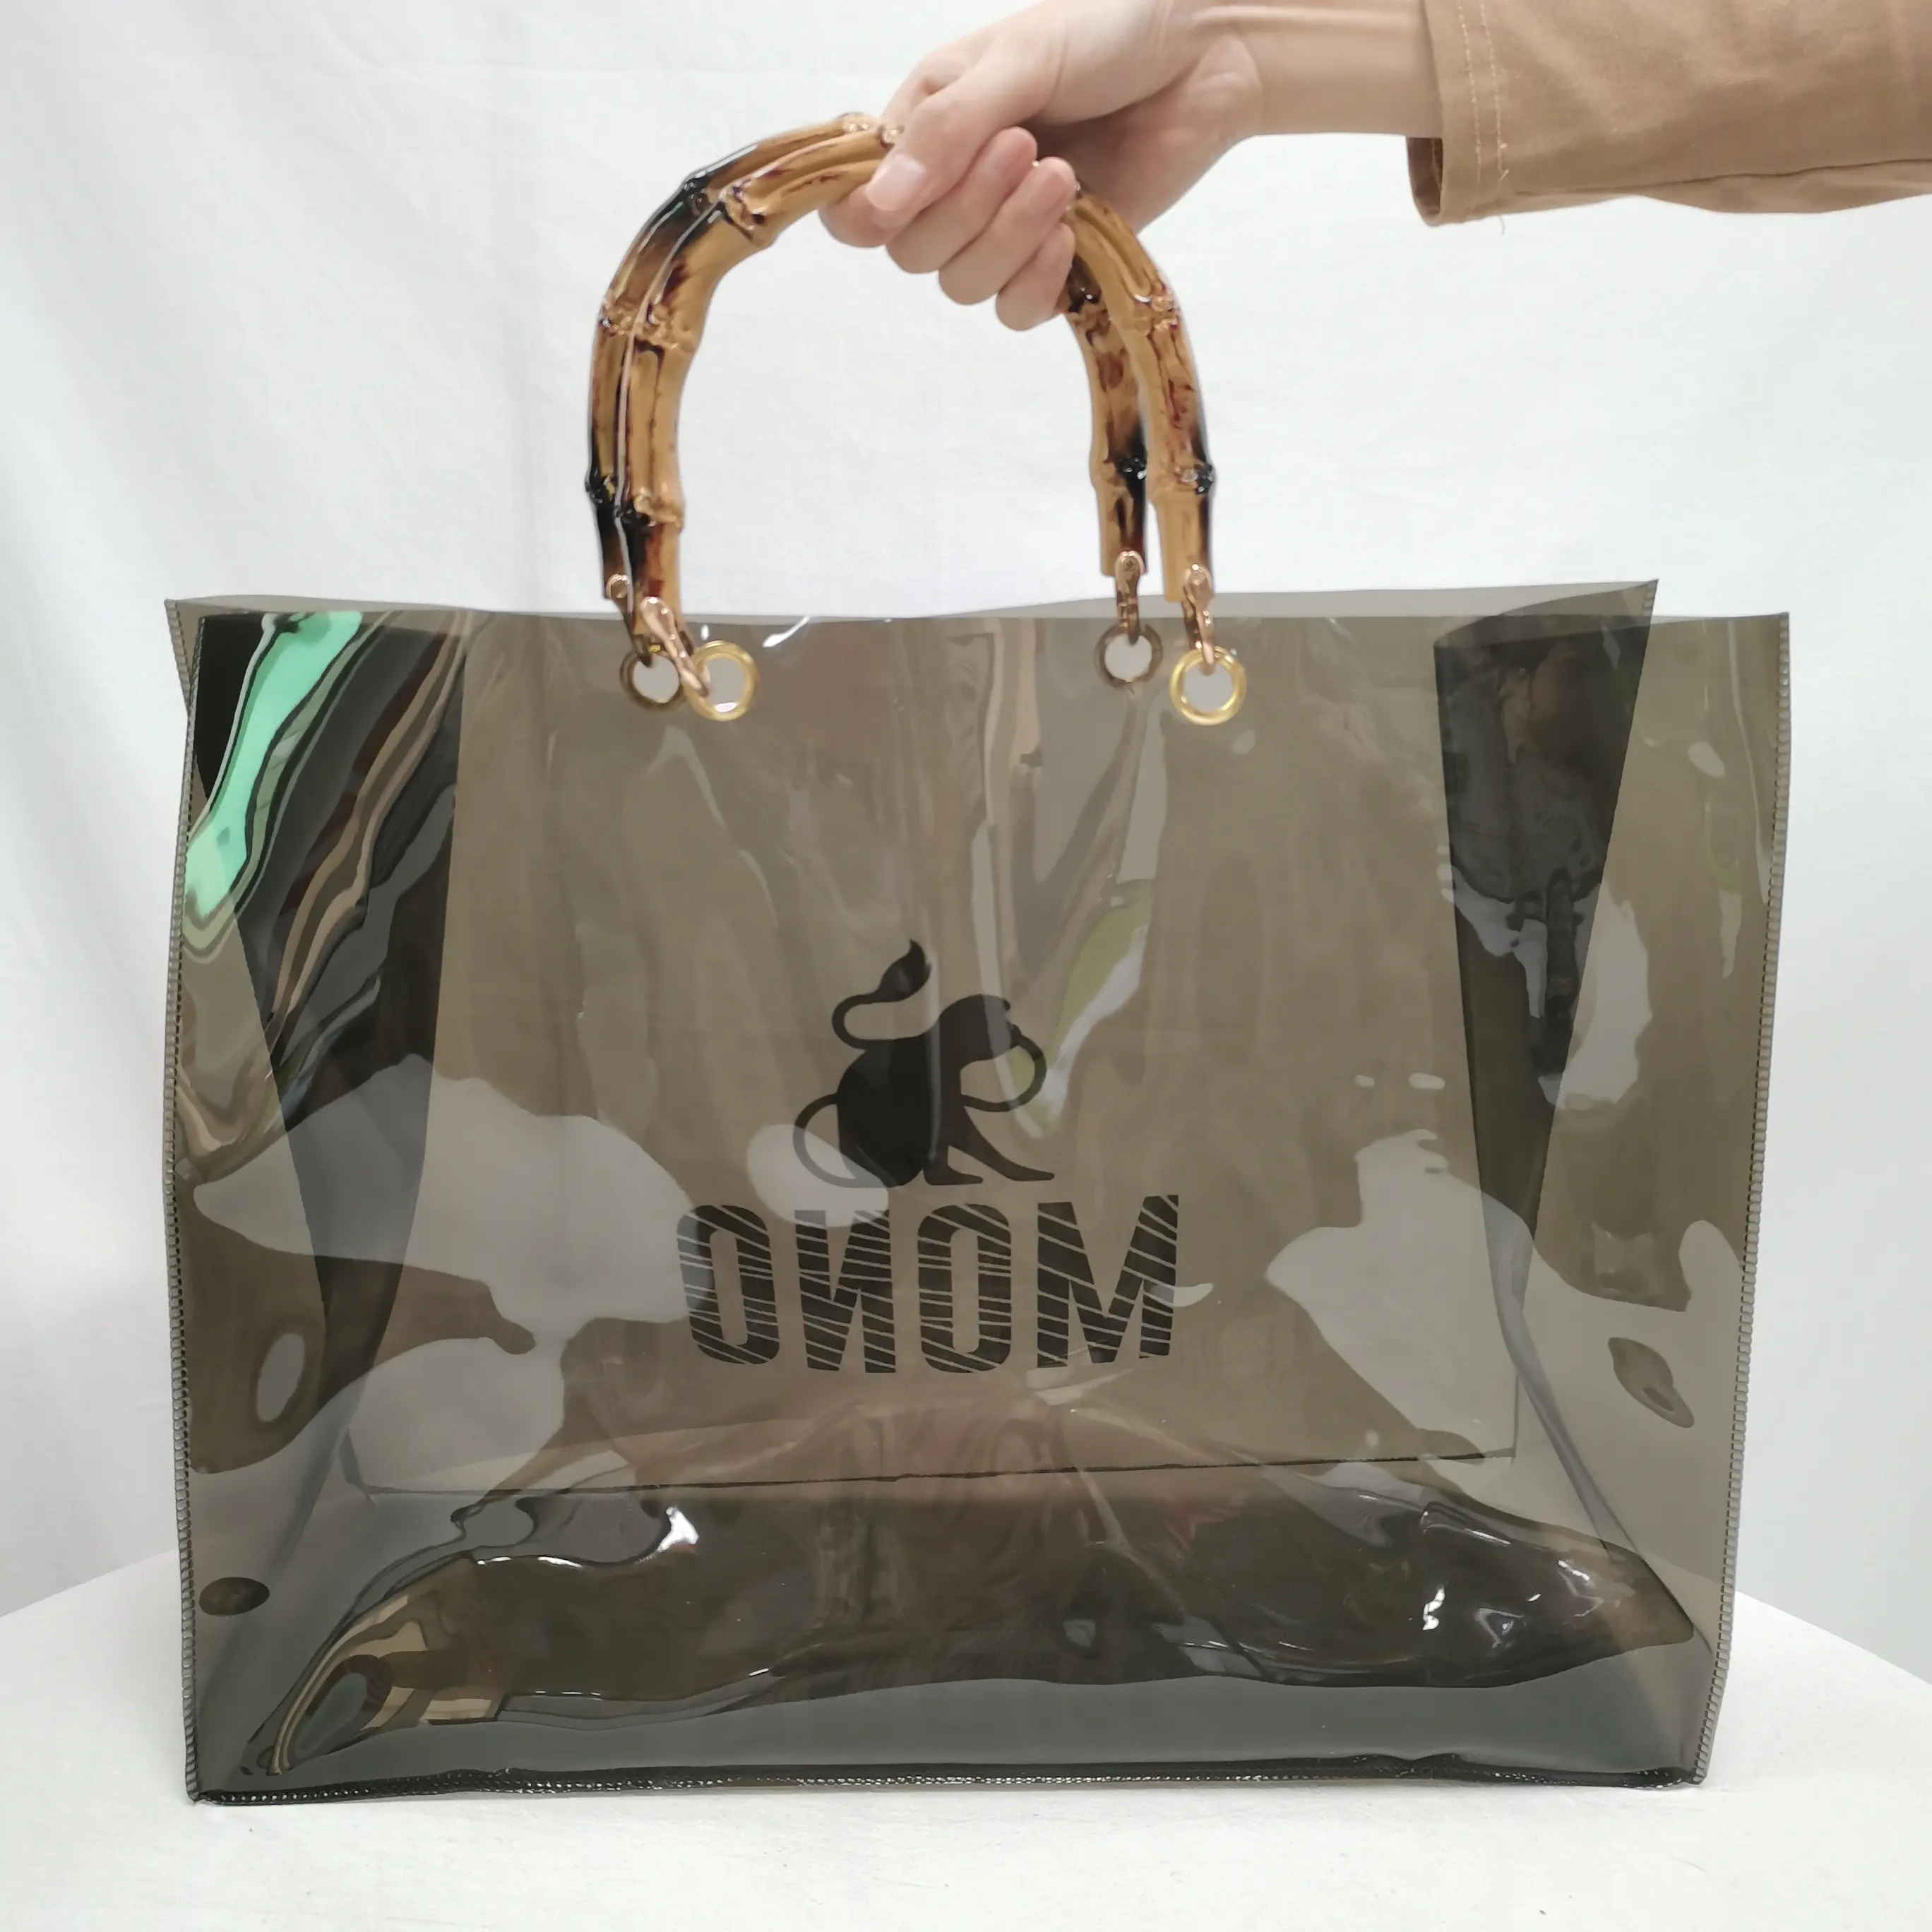 Moda personalizada compras mujer señoras negro PVC bolsos Tote monedero bolsa de playa con asas de Bambú